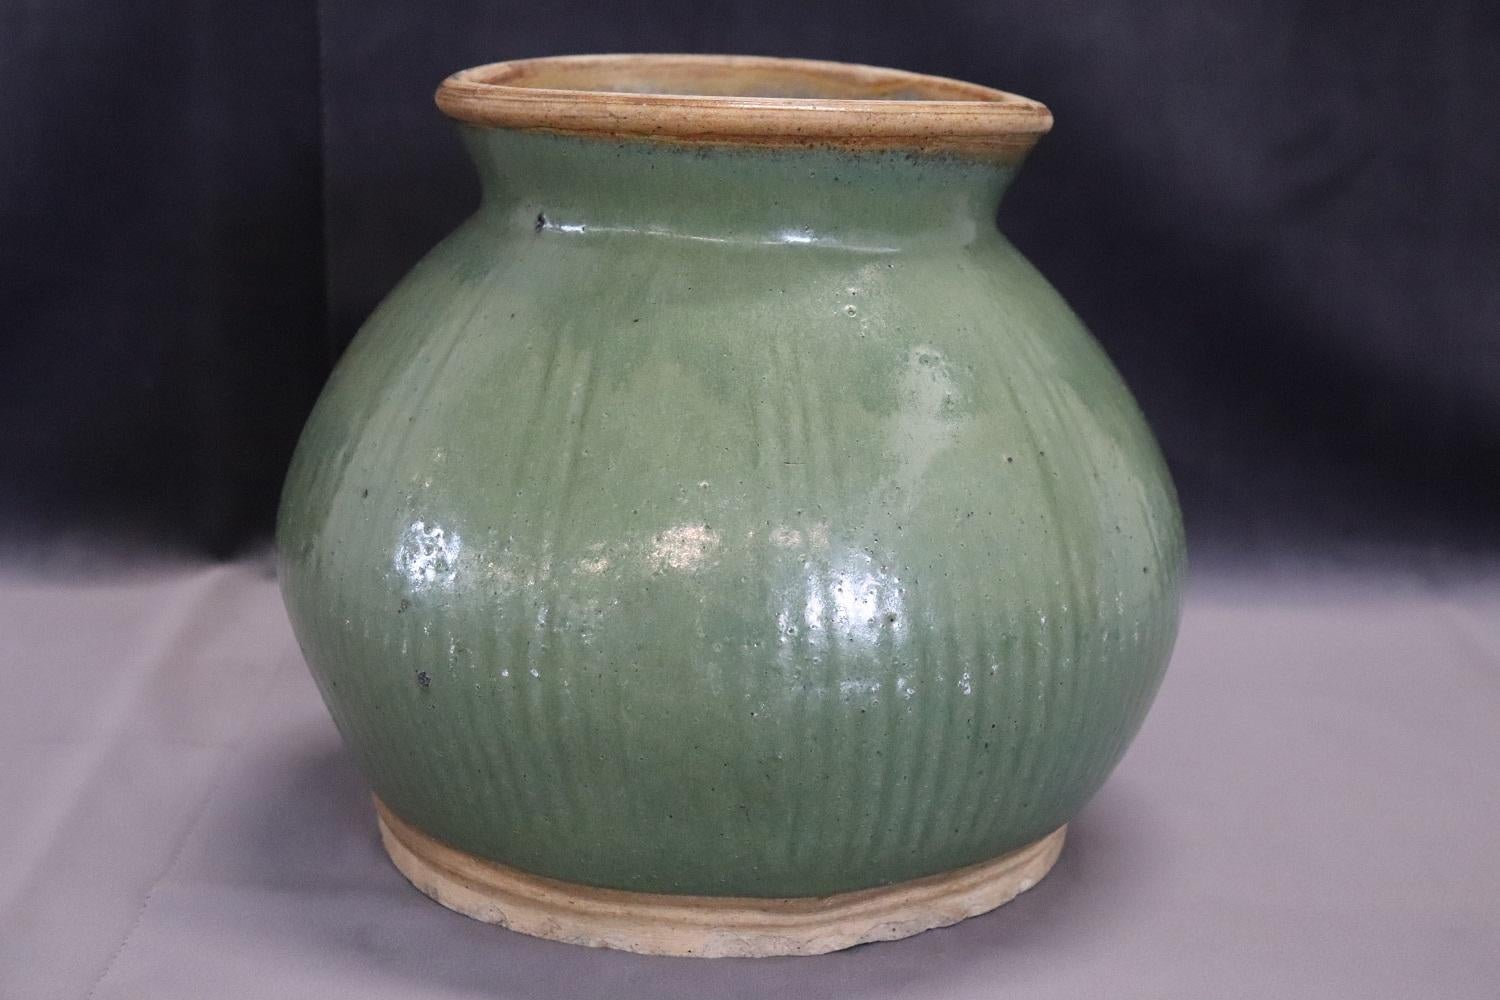 Cinese Importante vaso antico della dinastia Ming in gres cinese Celadon con dettaglio scanalato in vendita